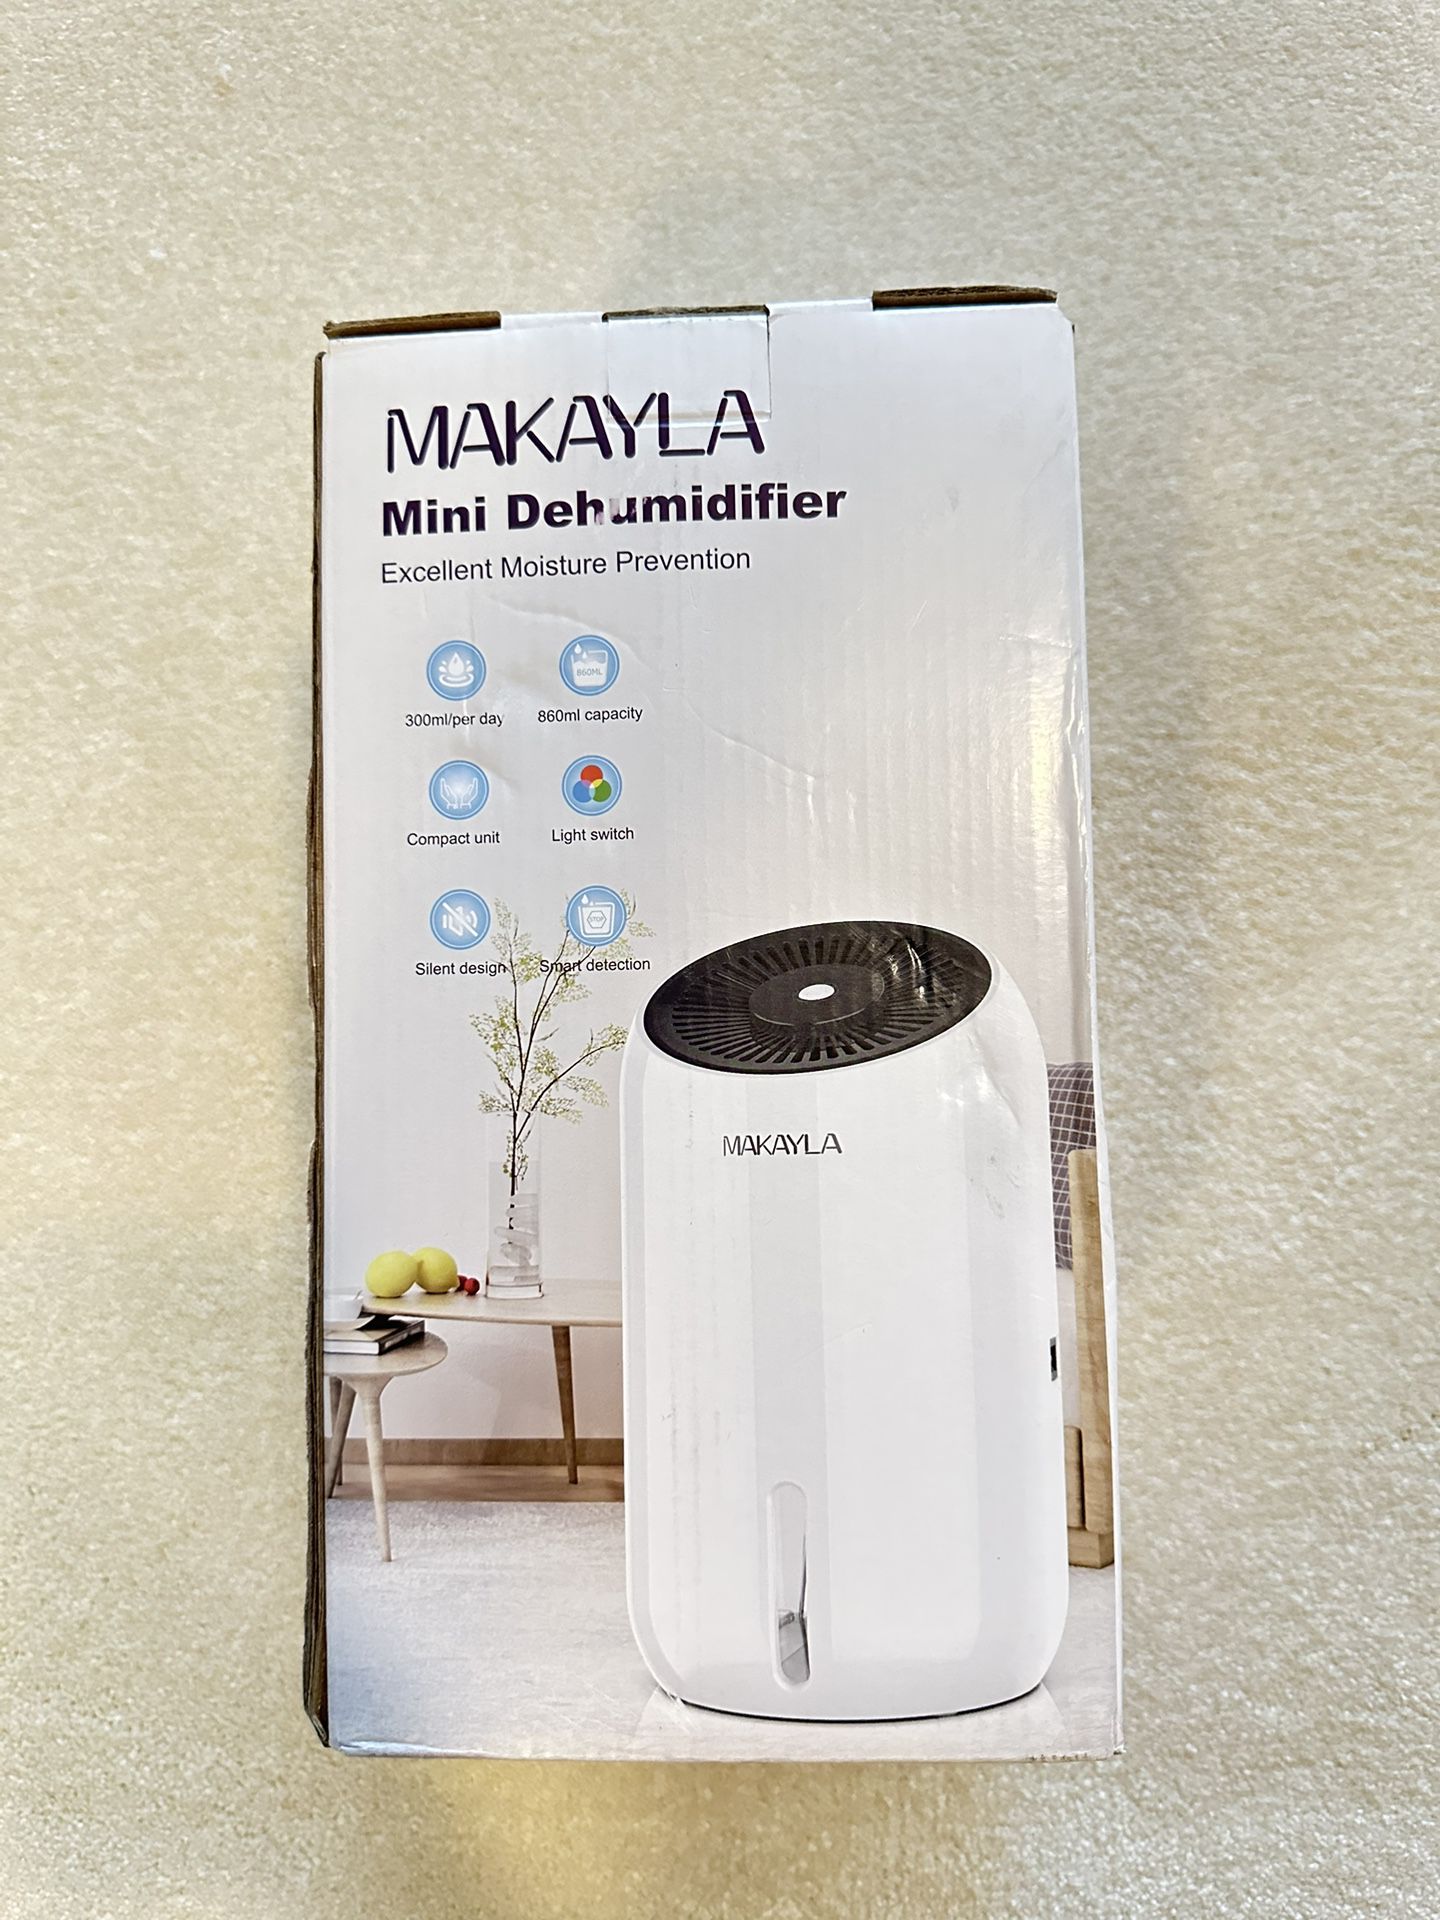 Mini home Dehumidifier